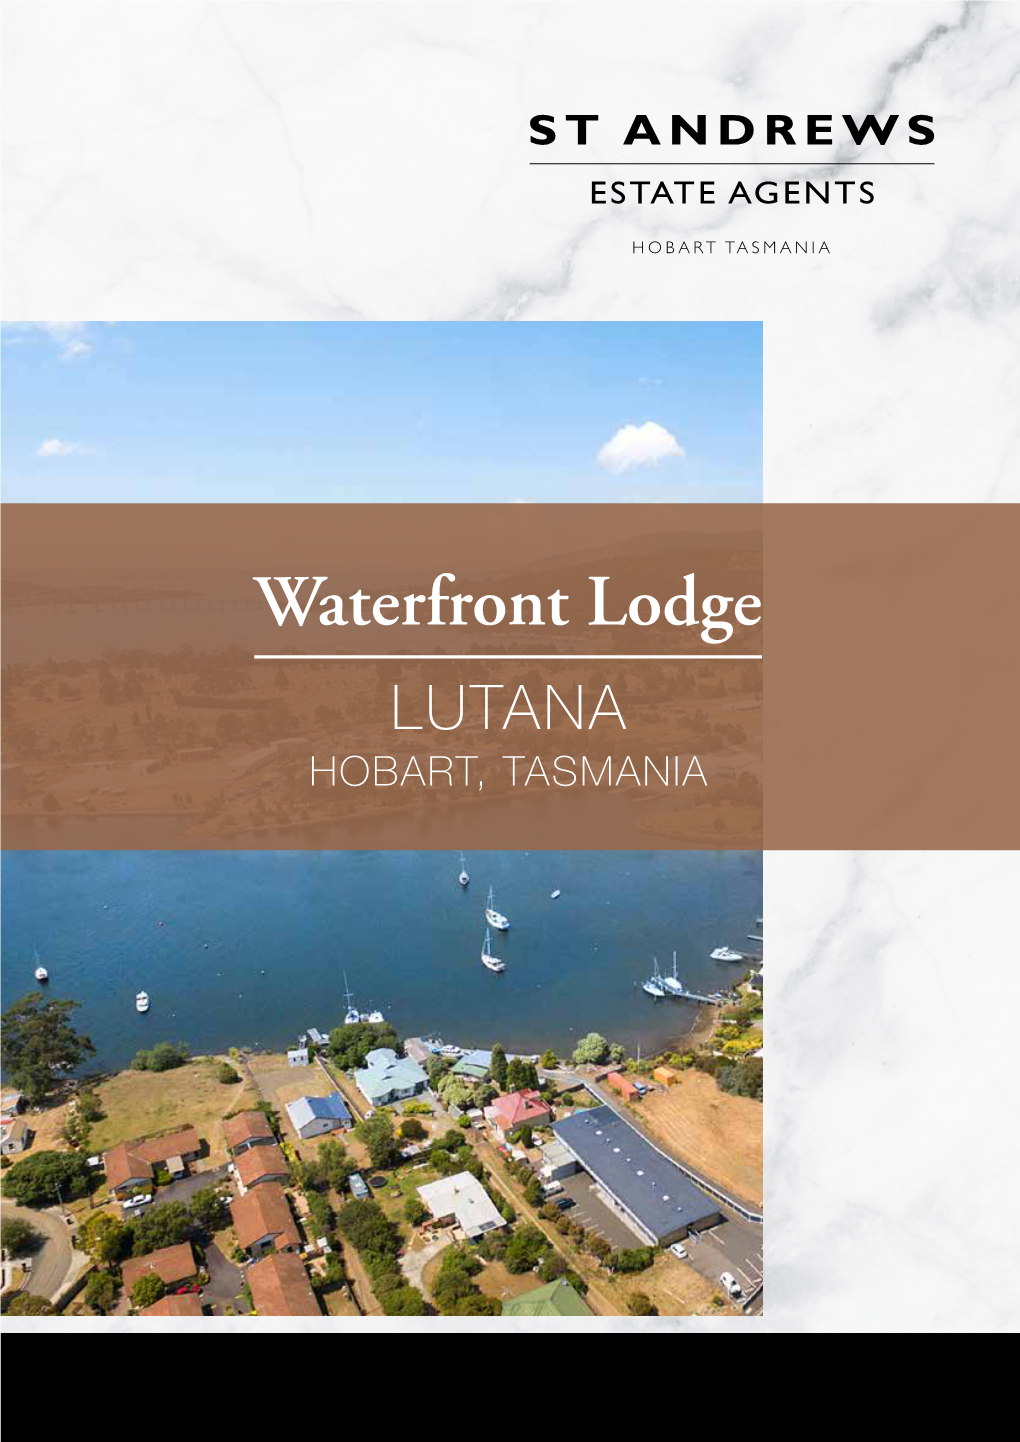 Waterfront Lodge LUTANA HOBART, TASMANIA 2 3 the Opportunity